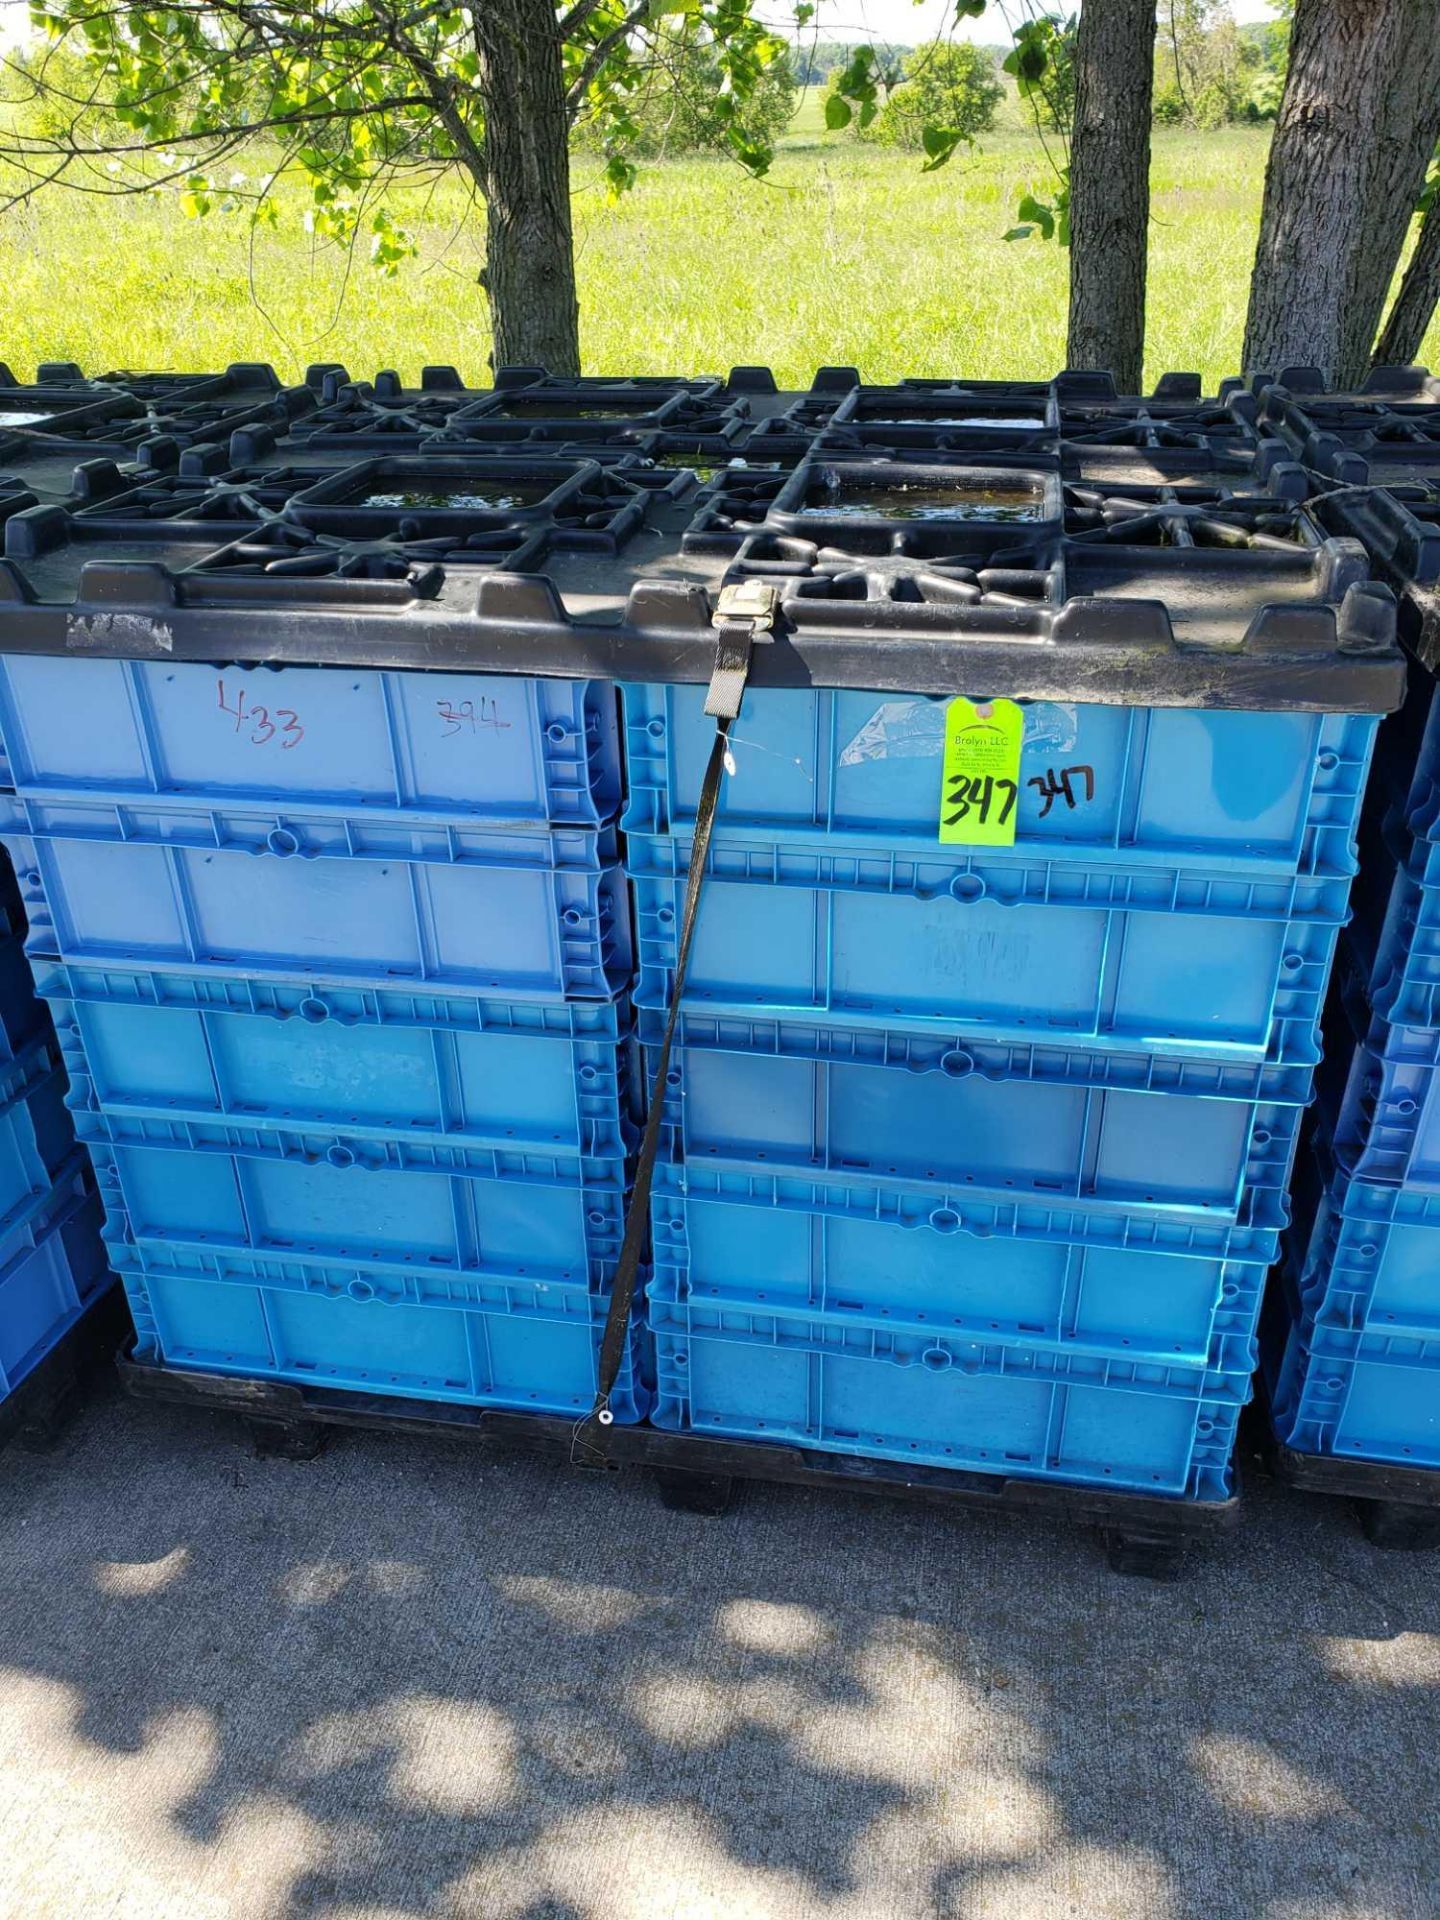 Qty 30 - plastic bins. 24" x 15" x 7" with pallet